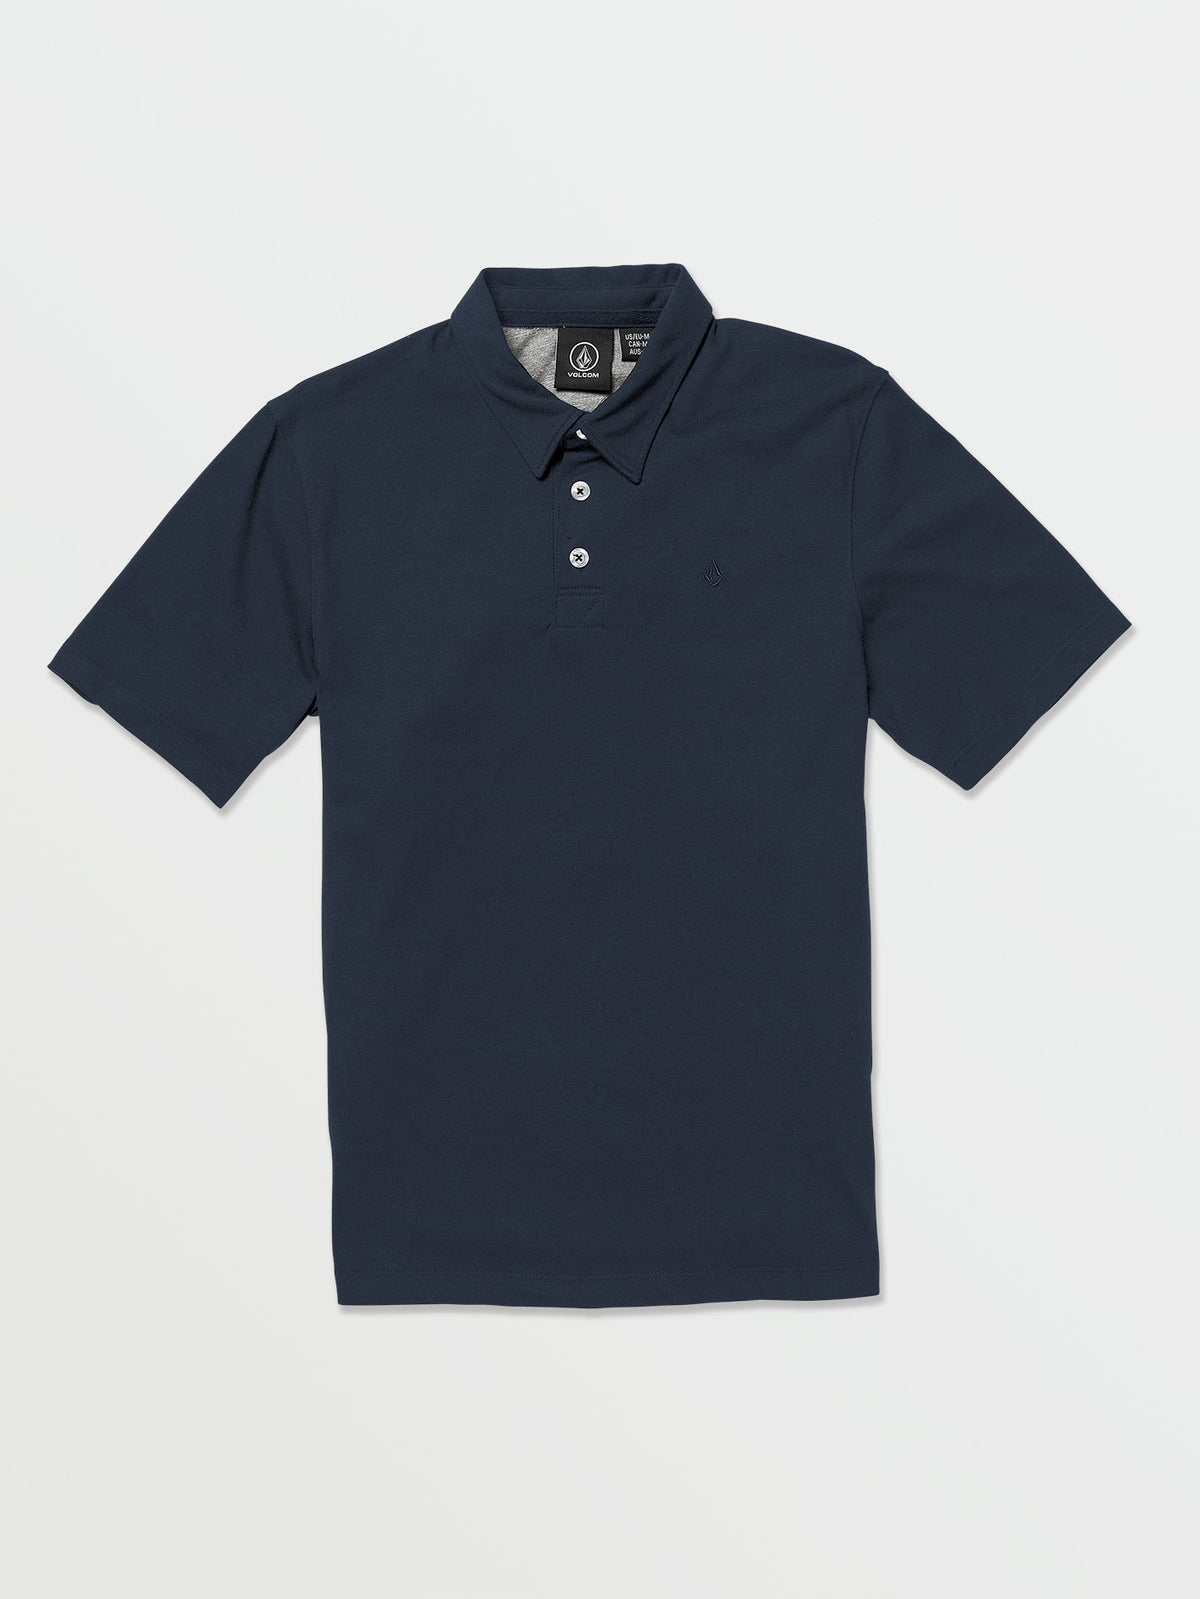 Volcom Wowzer Polo Boys Short Sleeve Shirt (Age 8-14) Navy